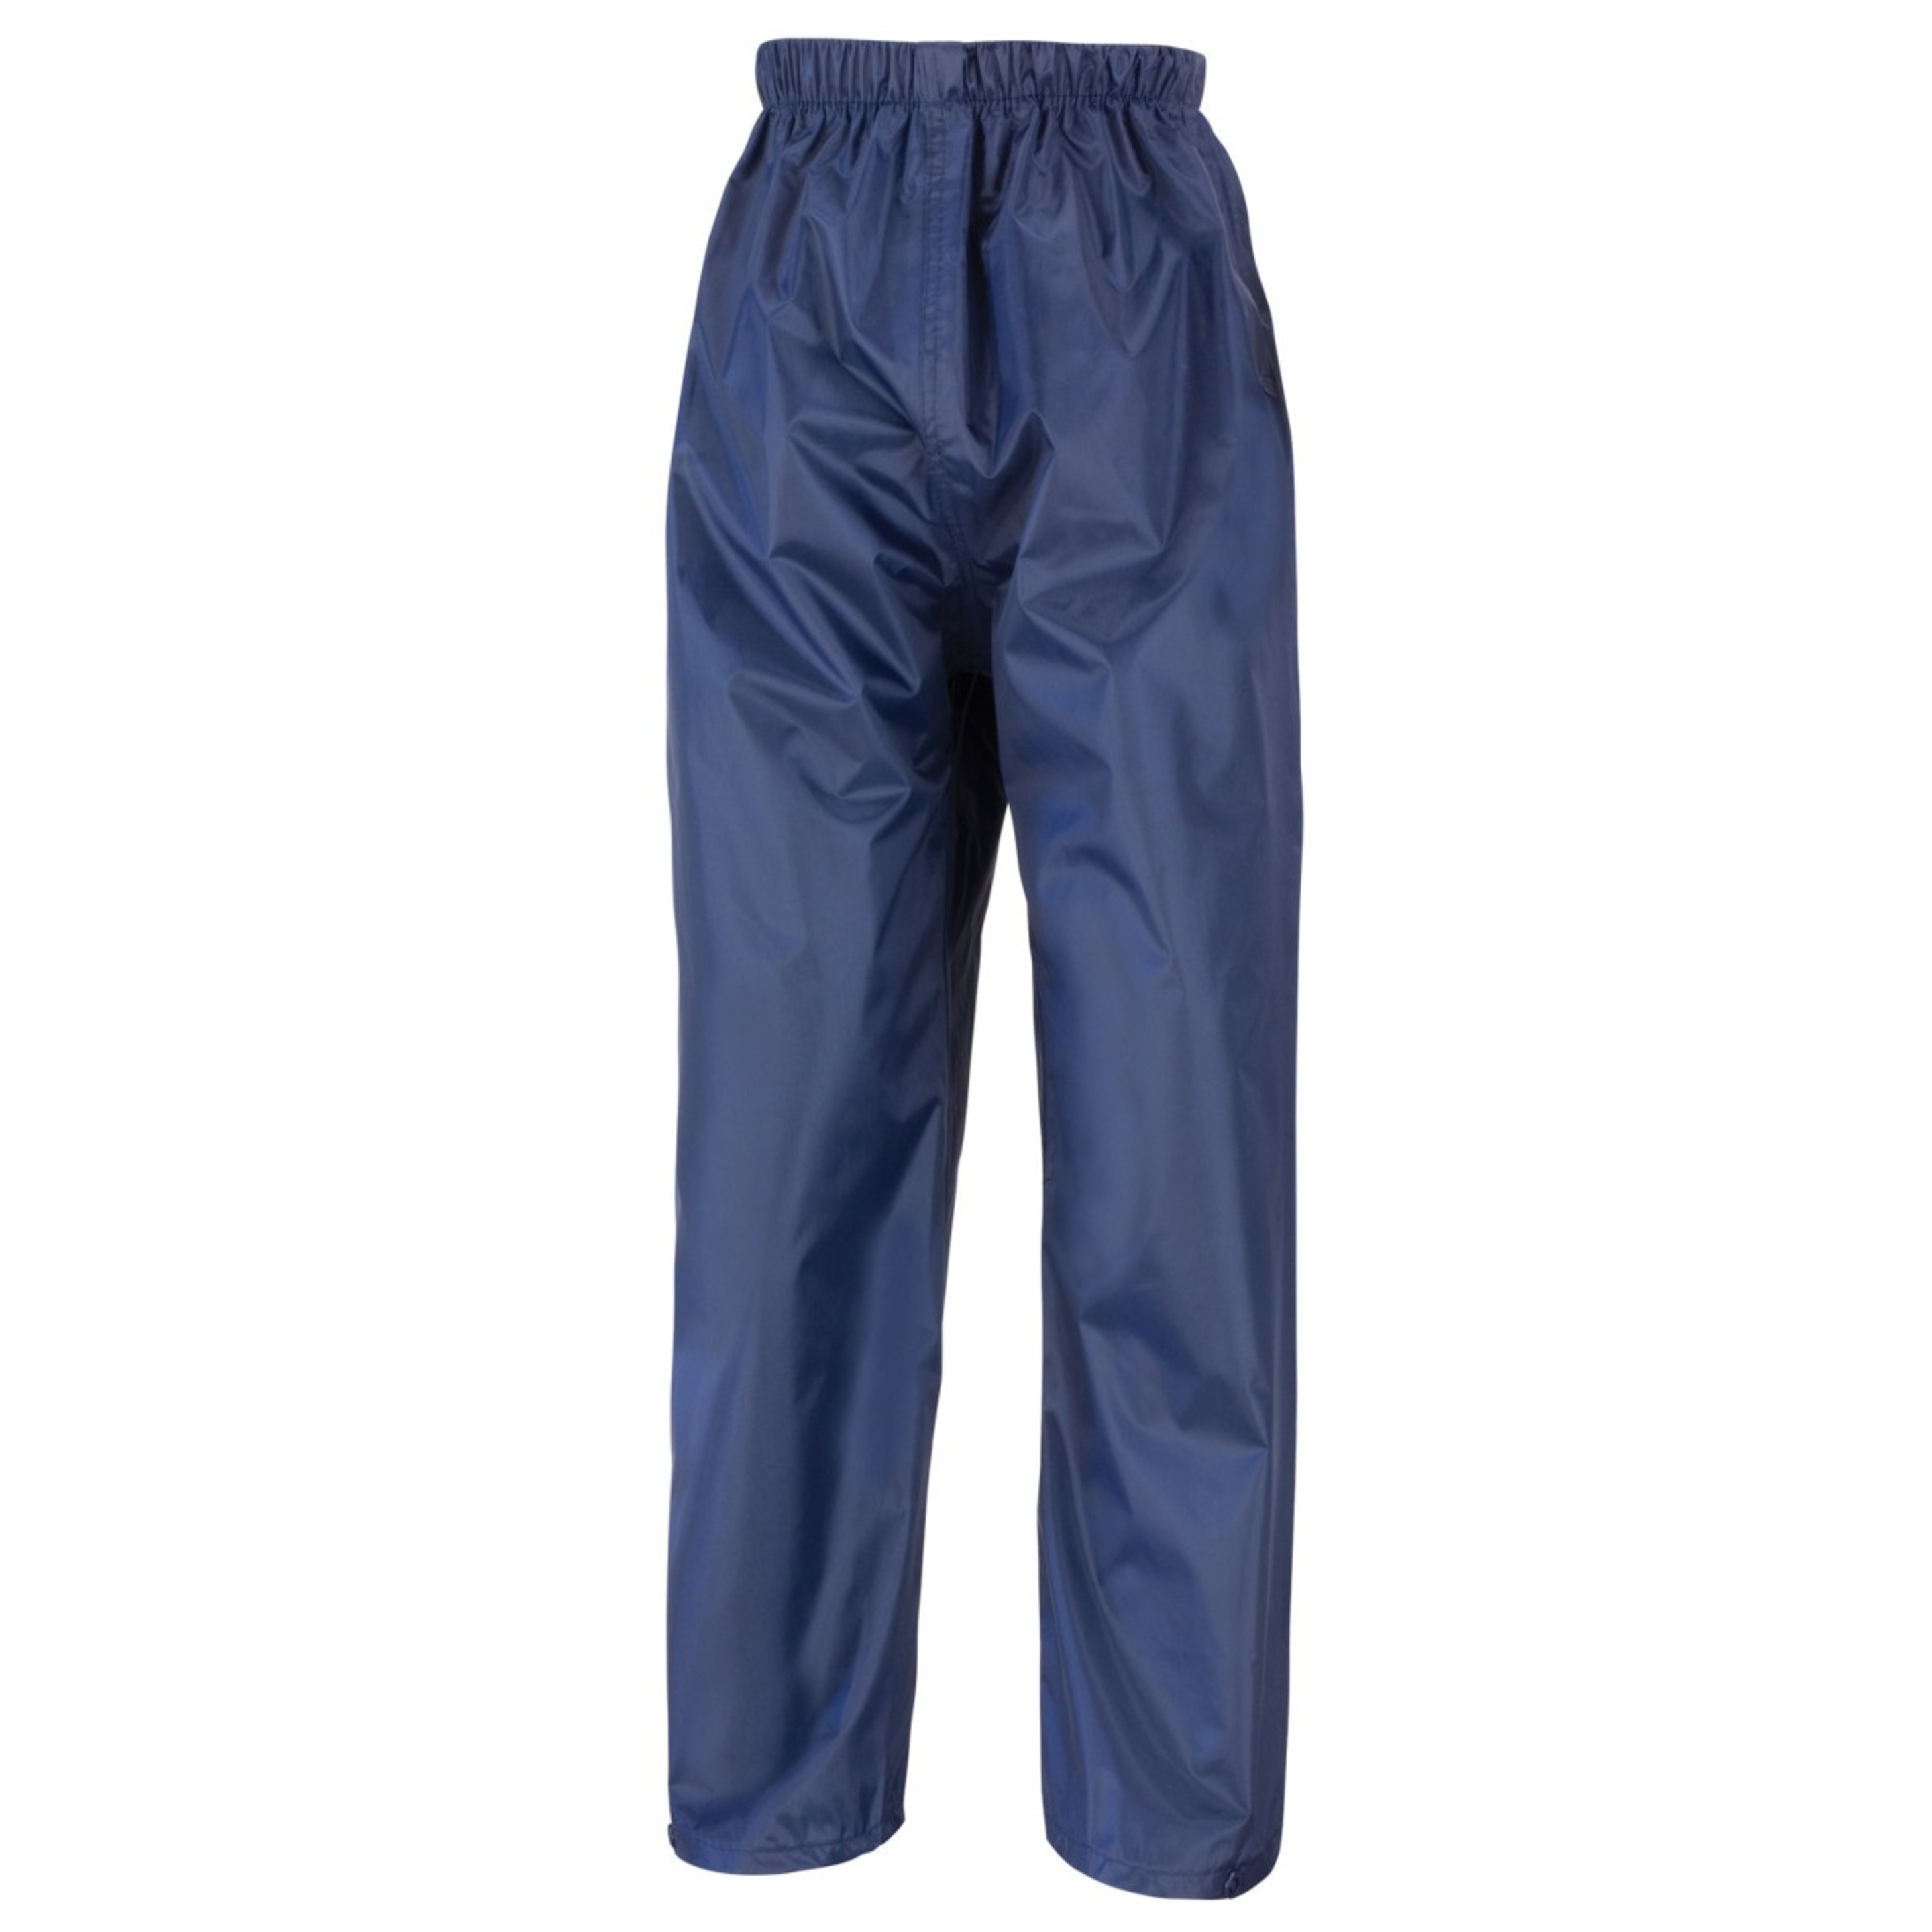 Pantalones Grandes Para Lluvia Modelo Core Stormdri Hombre Caballero Result (Azul)